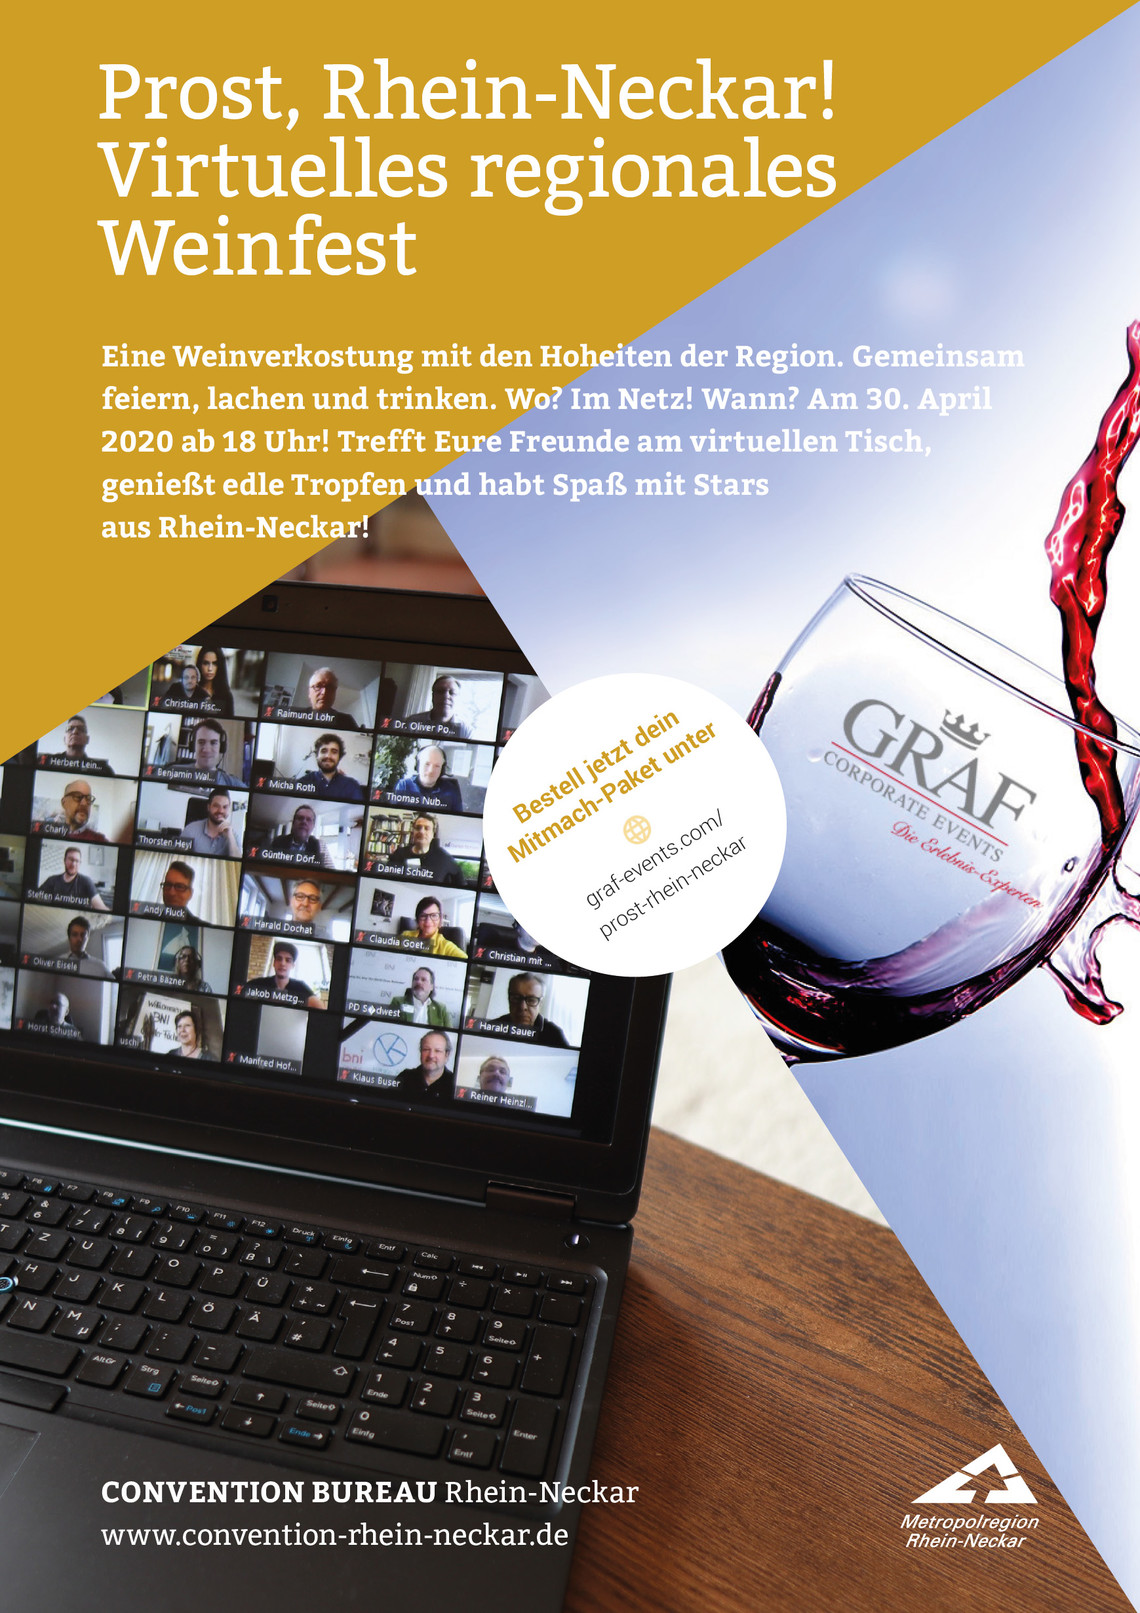 Plakat Prost Rhein-Neckar Virtuelles Weinfest 30. April 2020 | © MRN GmbH